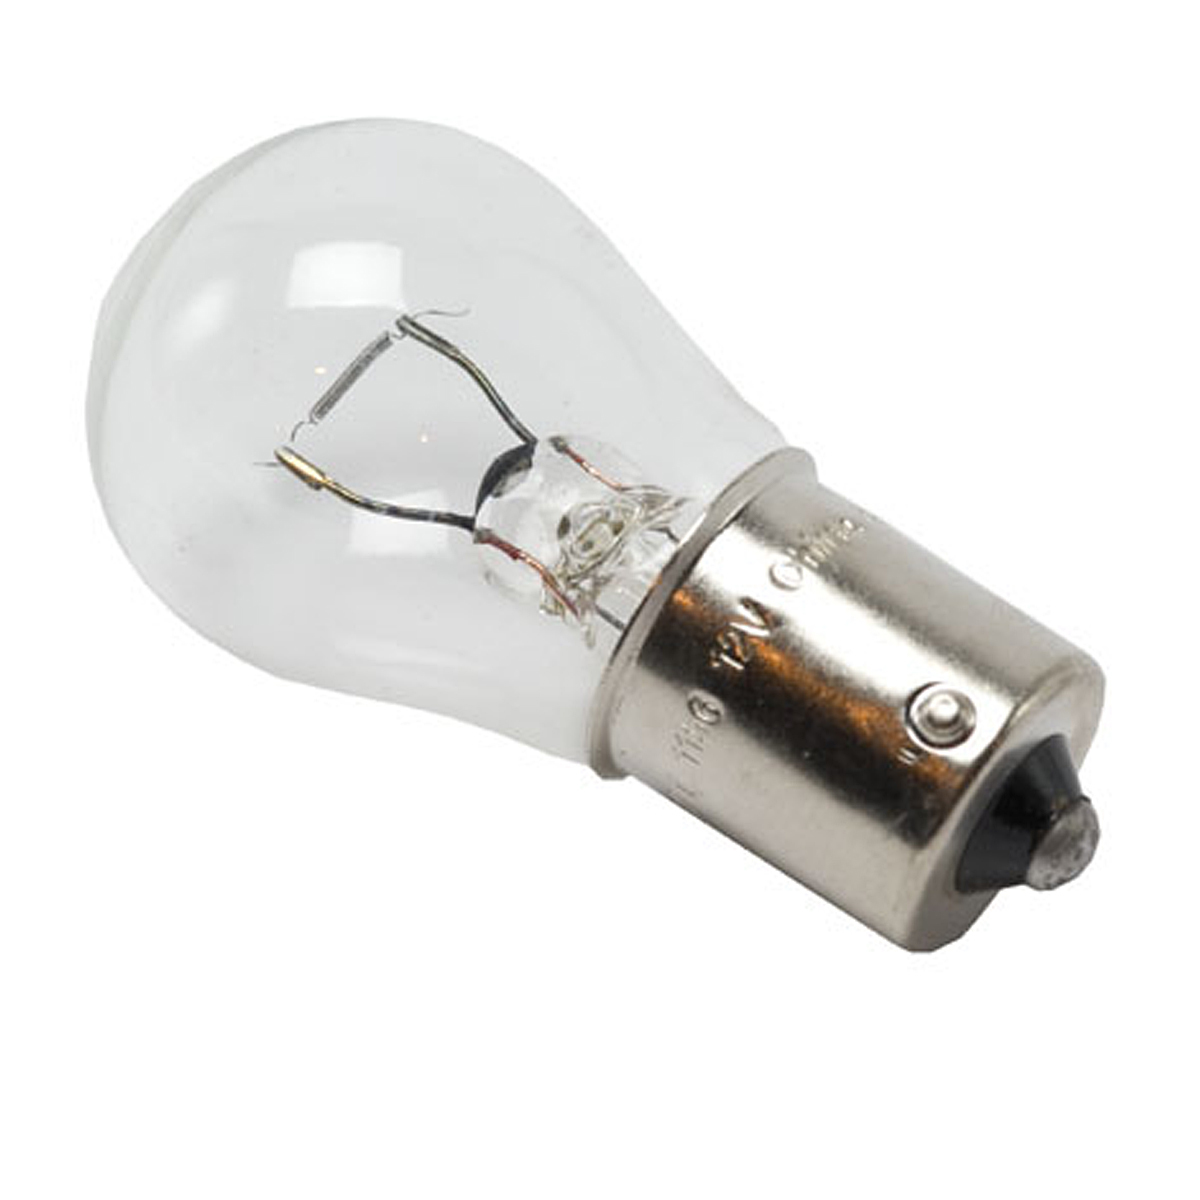 Headlight LED Bulb for John Deere L100 L107 L110 L120 L130 LTR155 LTR166 LTR180 